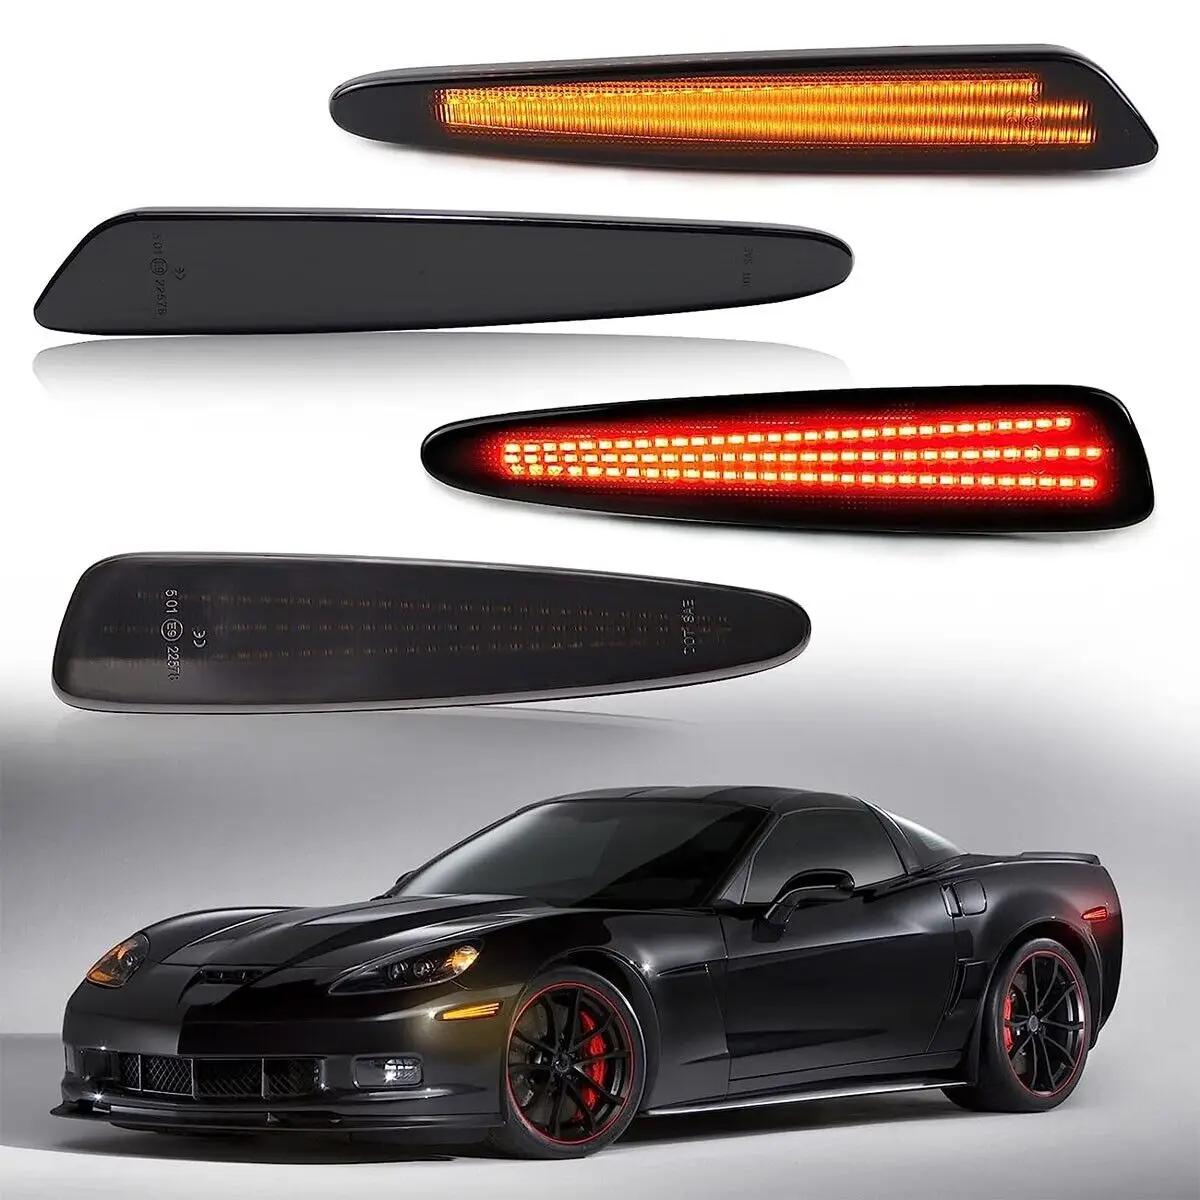 

Full LED Side Marker Light For Chevrolet Chevy Corvette C6 2005-2013 Front Rear Amber Red Auto Turn Signal Lamp